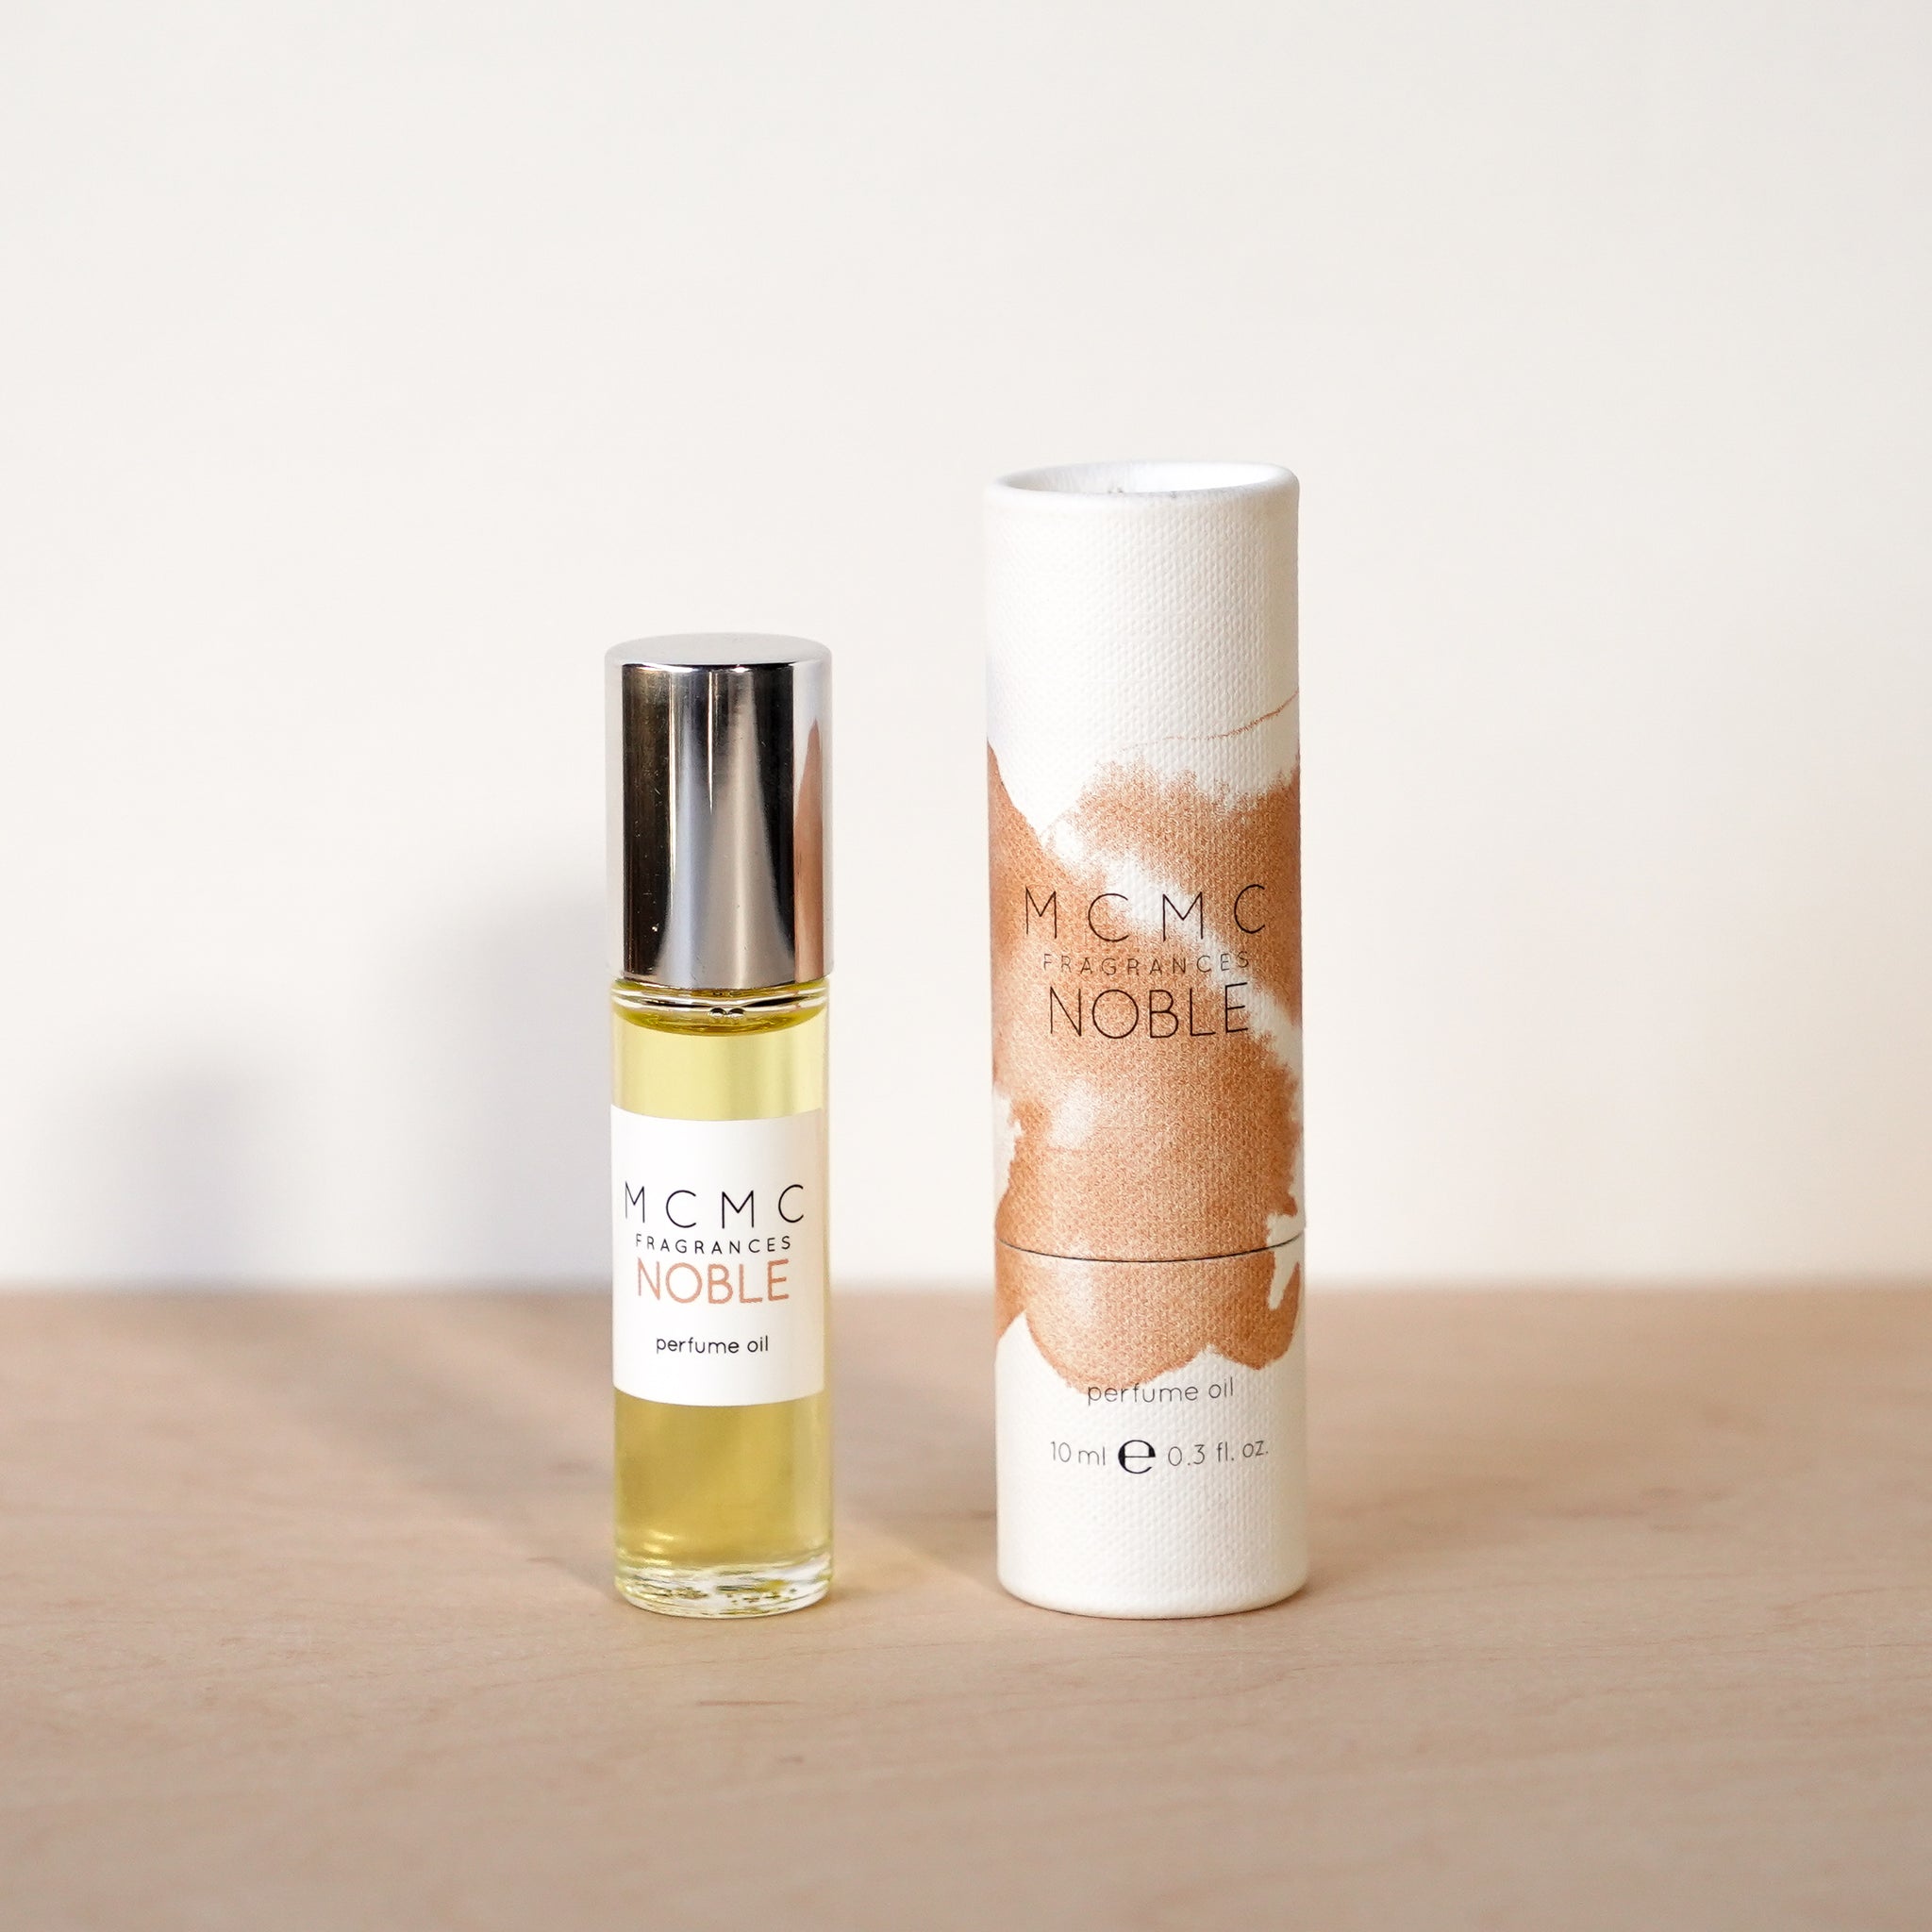 MCMC Perfume Oil